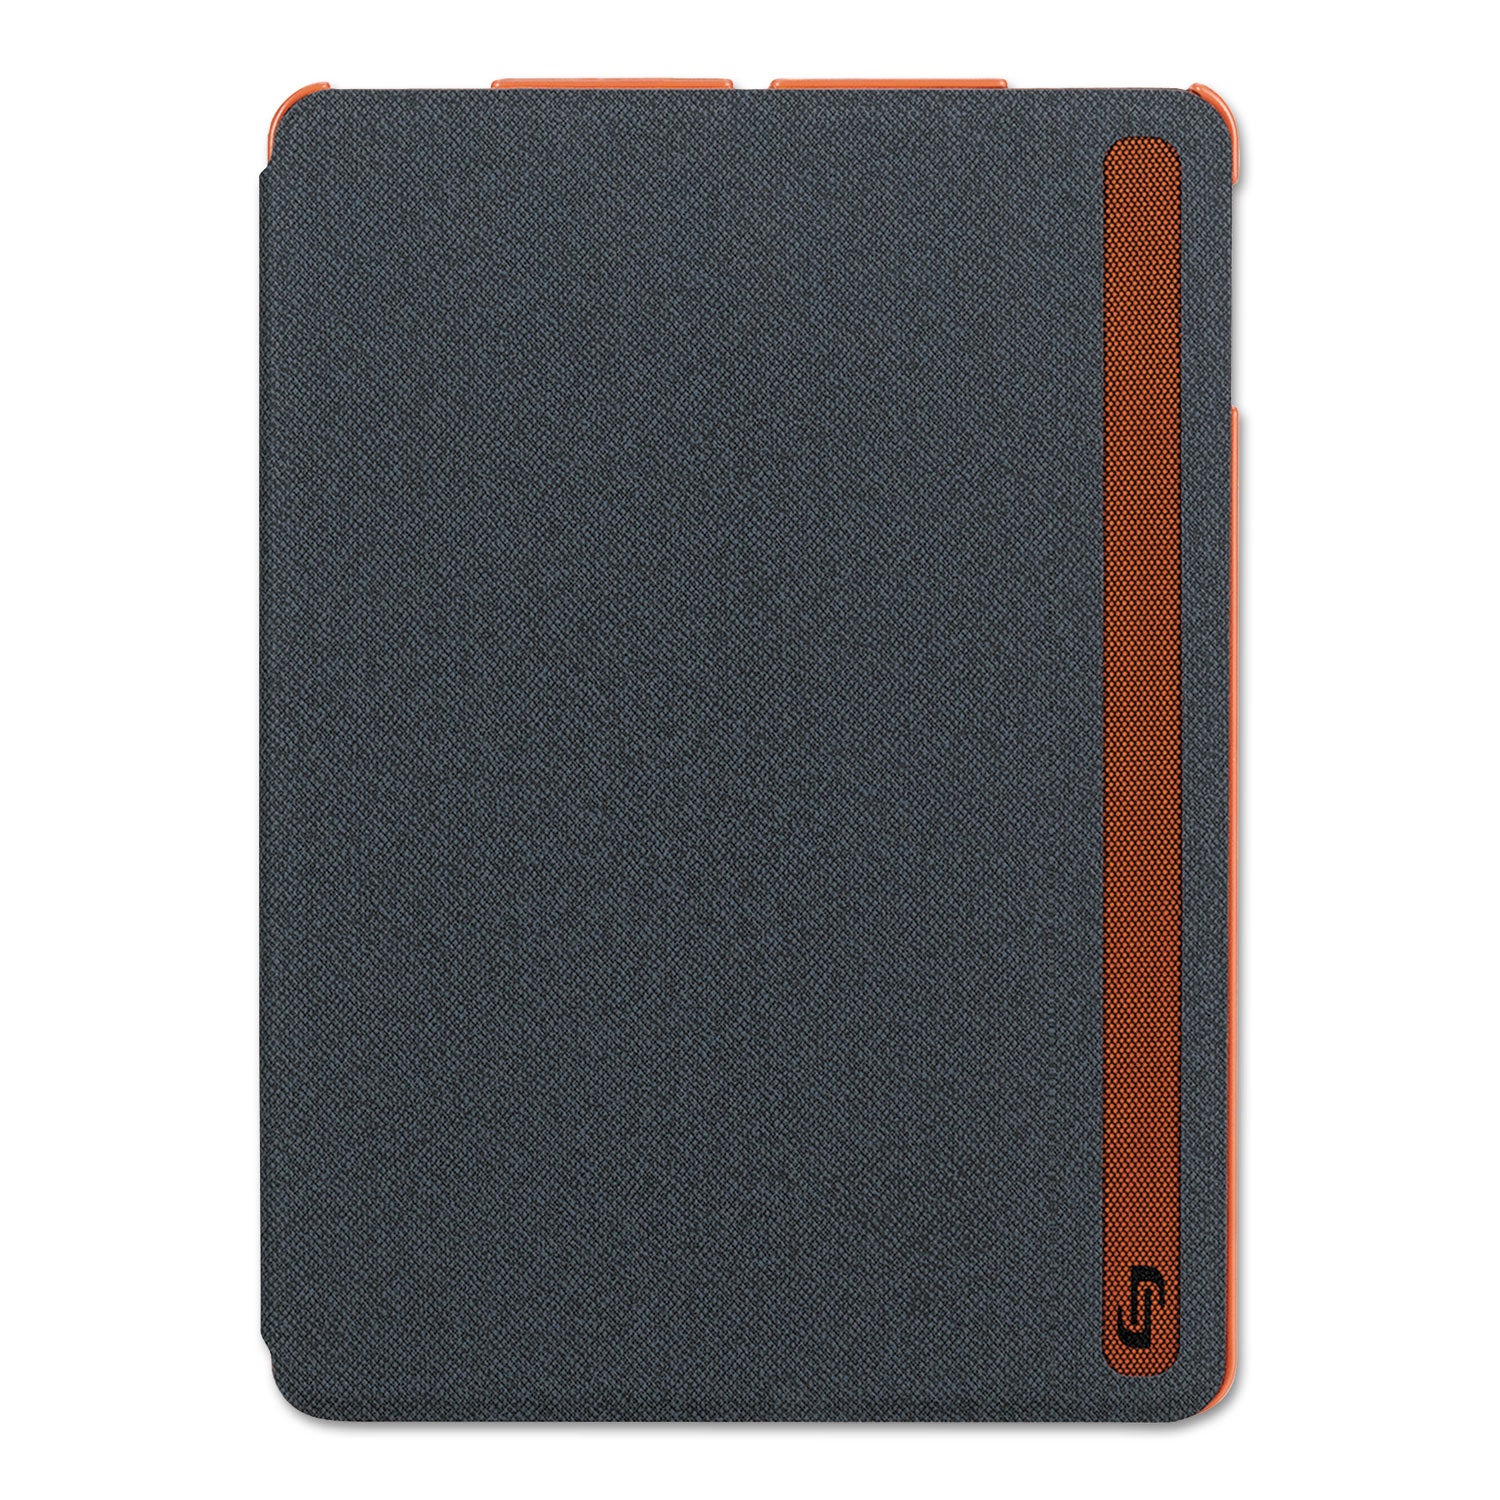 austin-ipad-air-case-polyester-gray-orange_uslipd212610 - 2